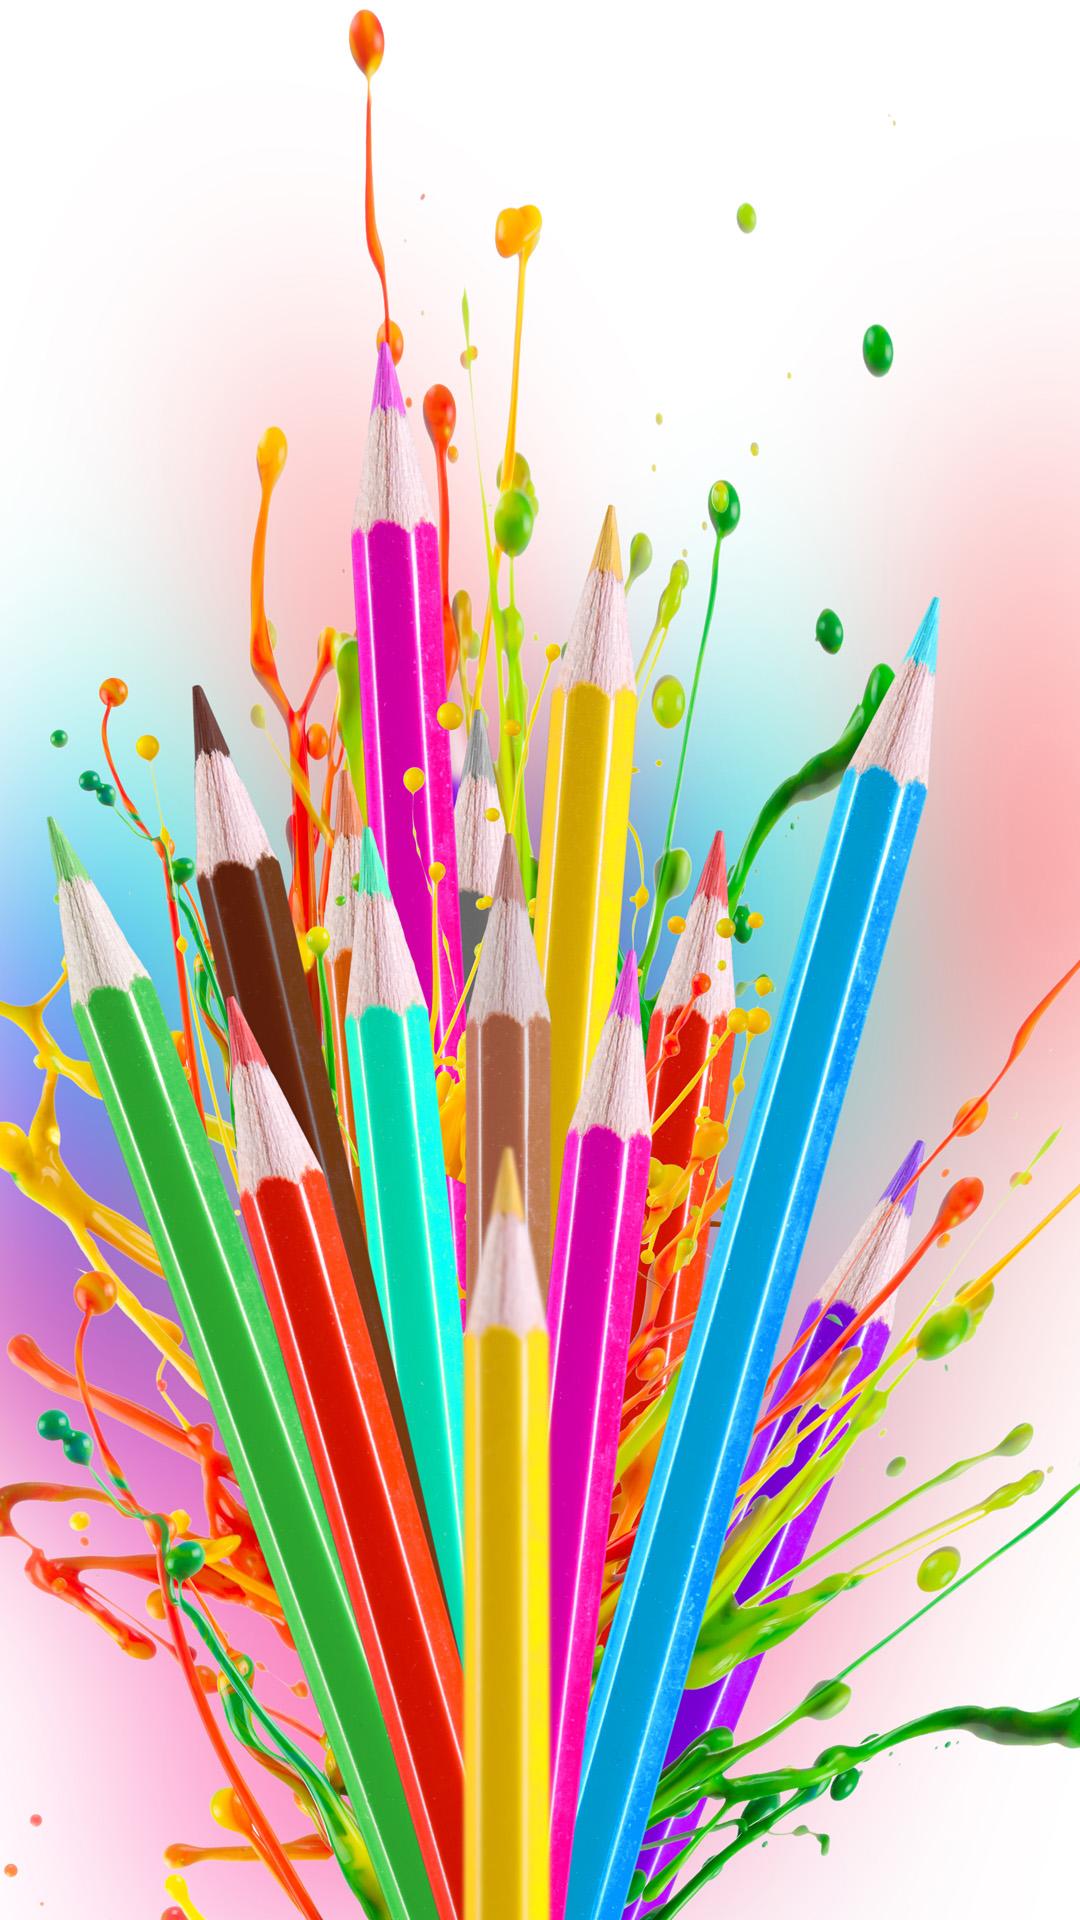 Creative Art crayons iphone wallpaper